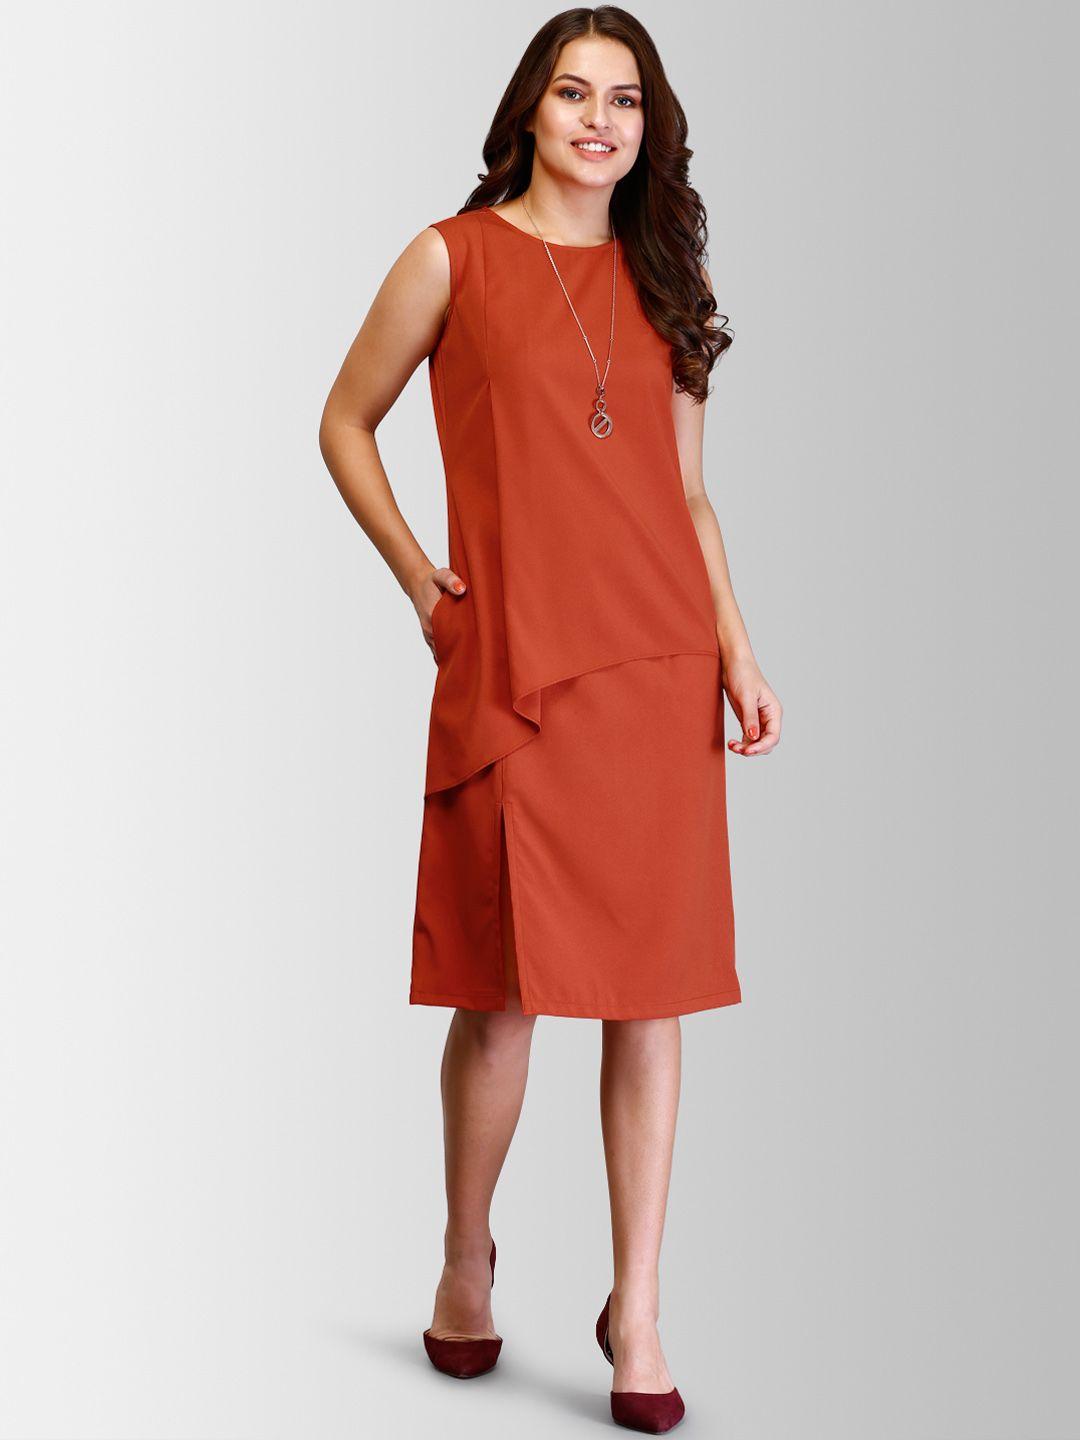 fablestreet women rust orange solid layered sheath dress